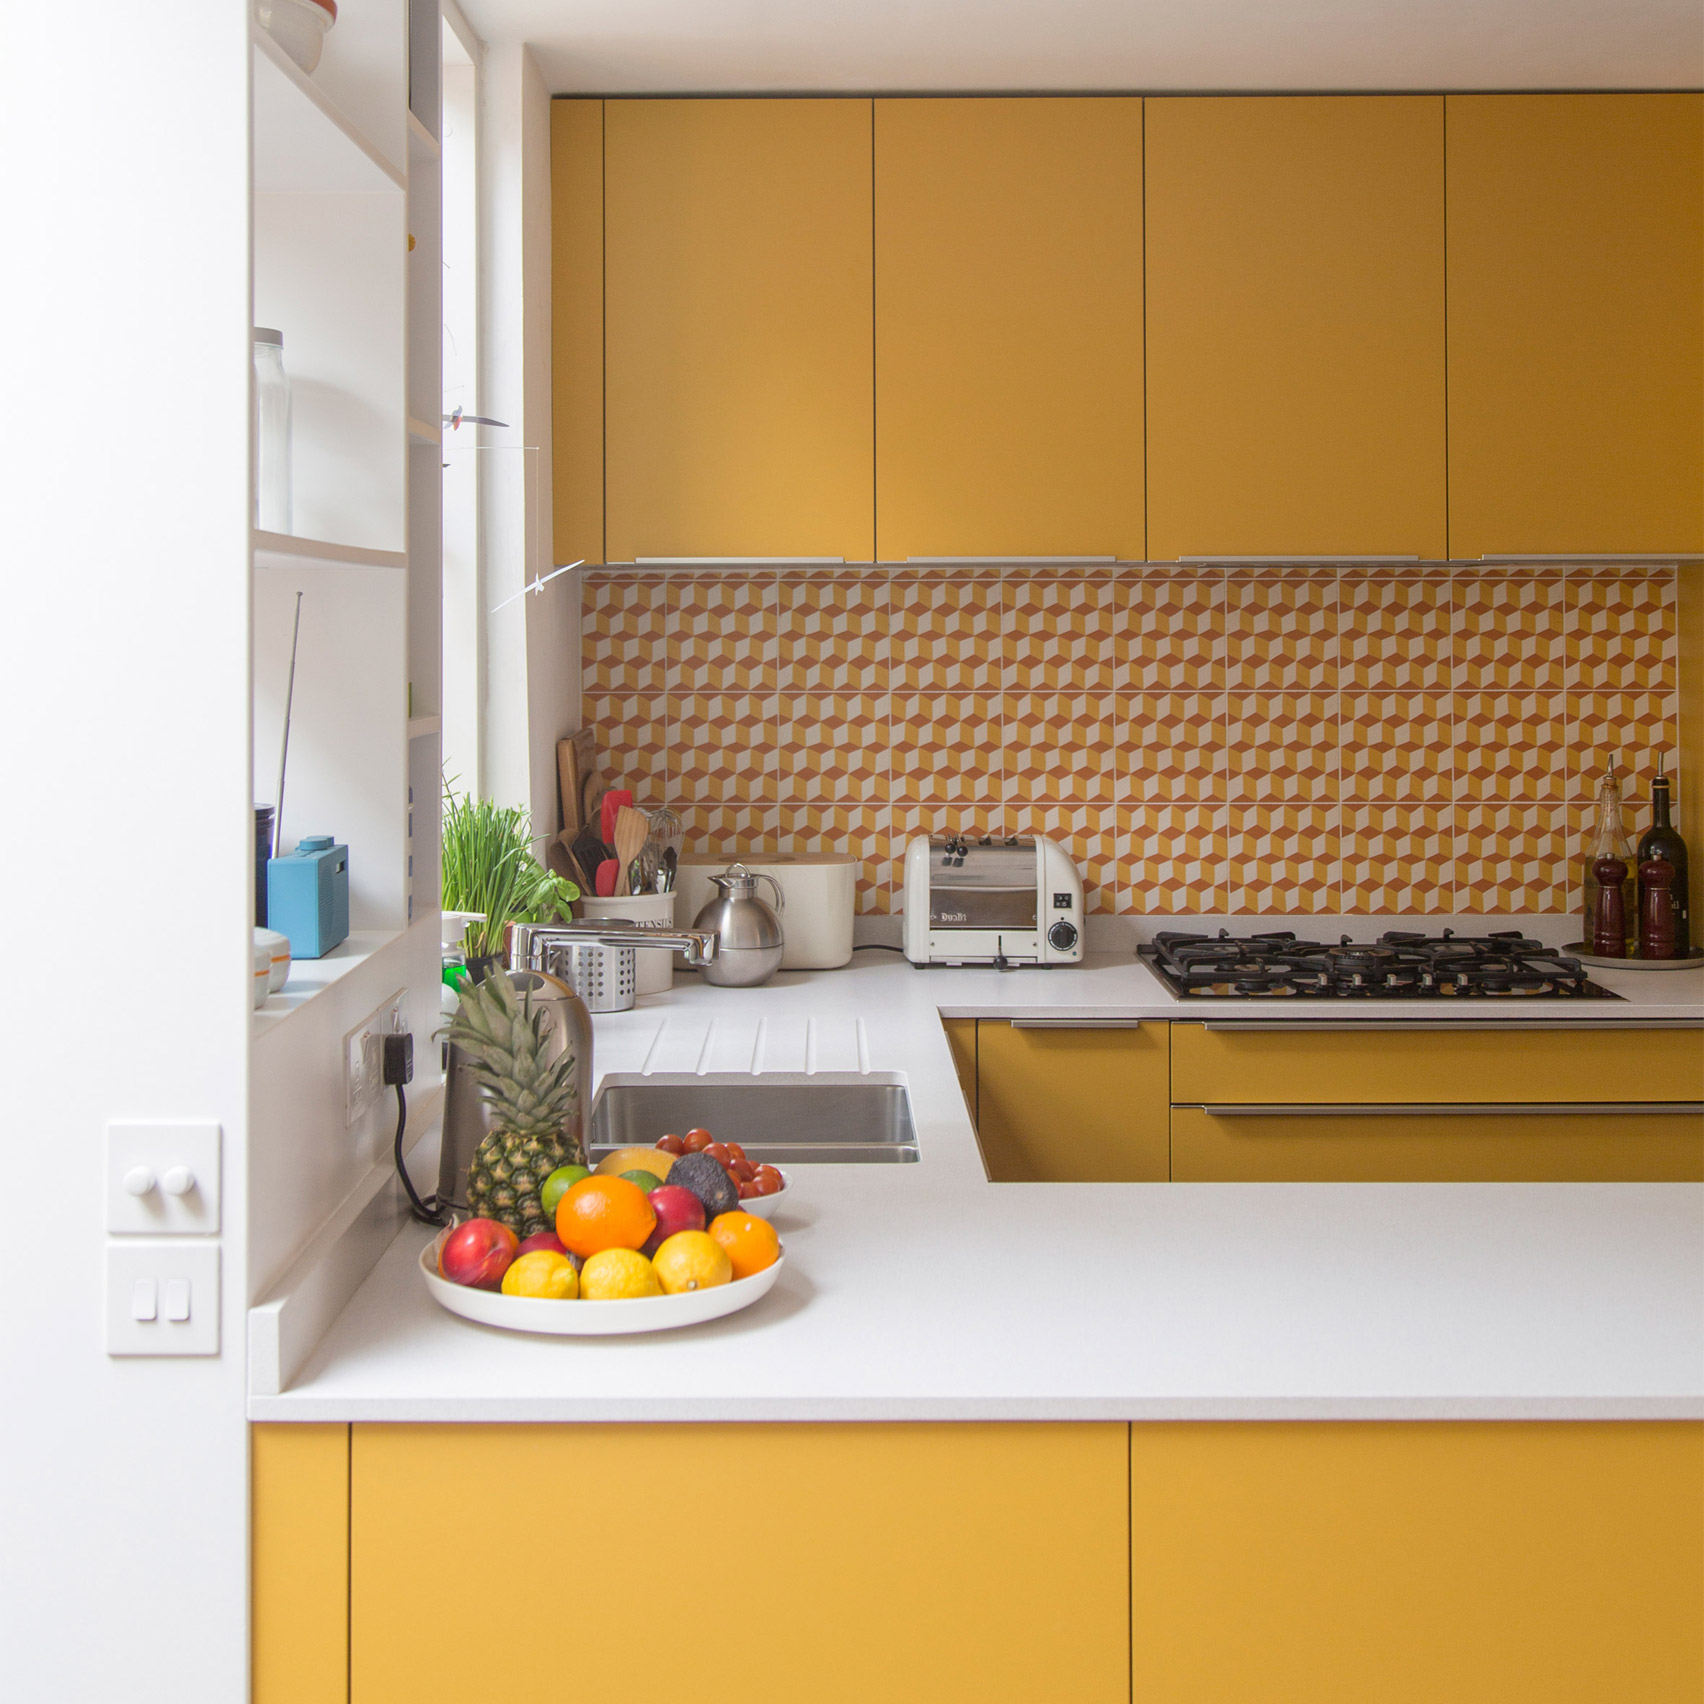 Mustard yellow kitchen with orange splashback tiles